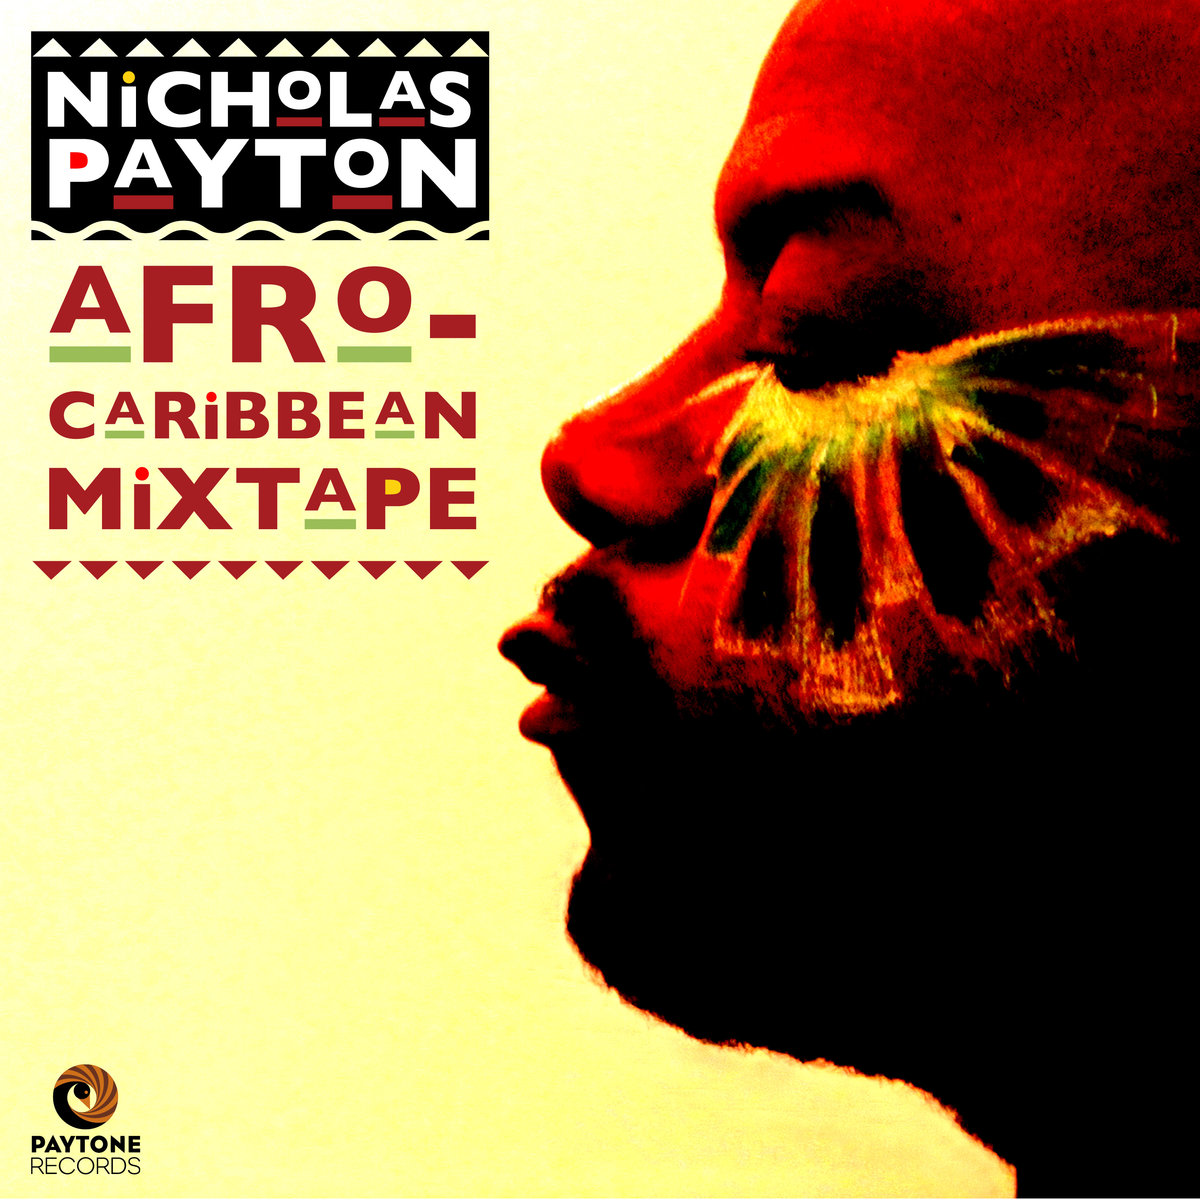 NICHOLAS PAYTON - Afro-Caribbean Mixtape cover 